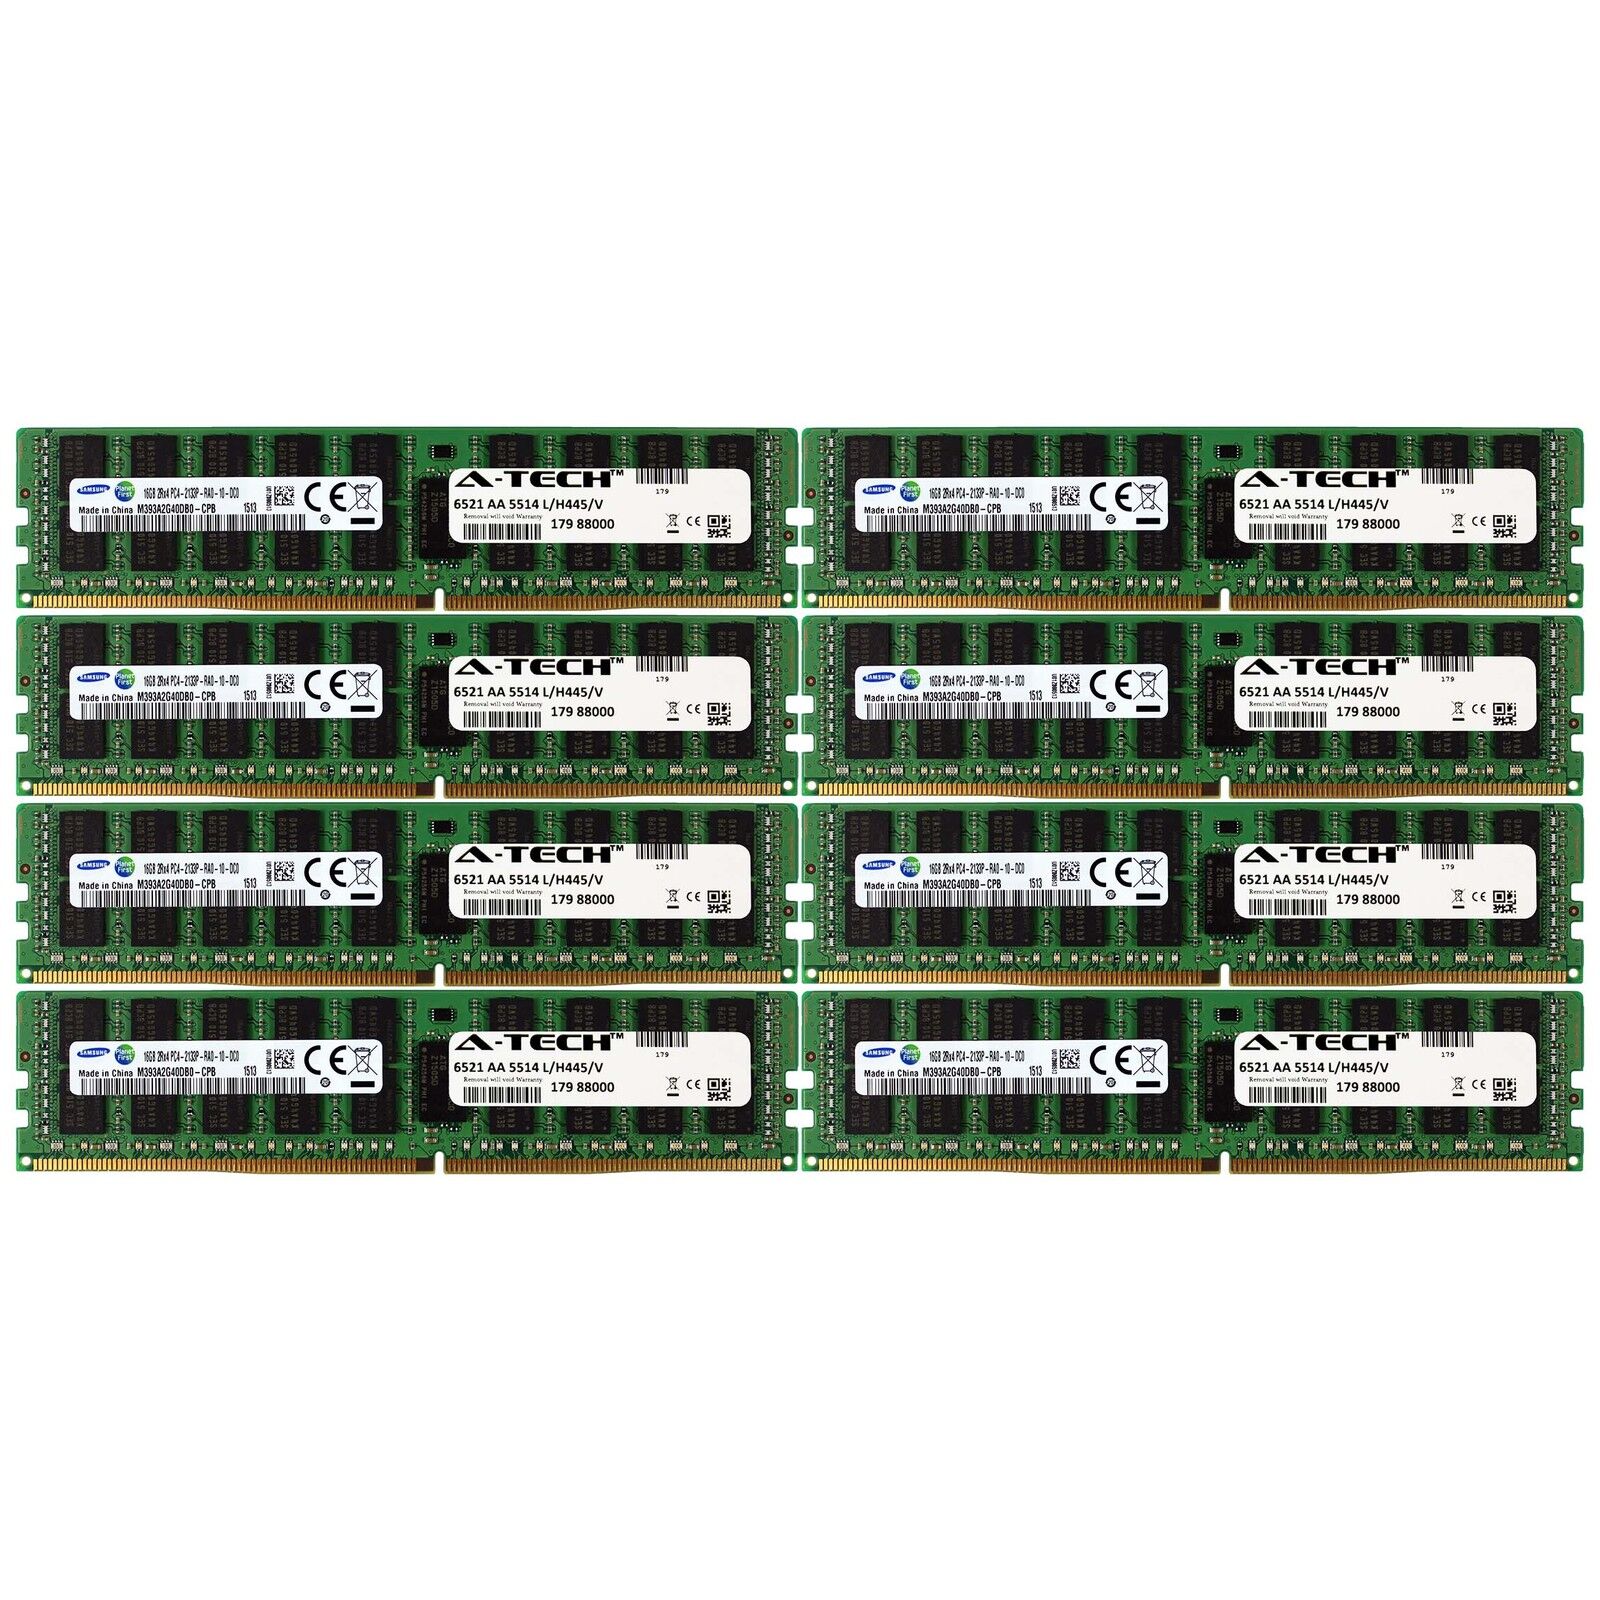 DDR4 2133MHz Samsung 128GB Kit 8x 16GB HP Cloudline CL2100 726719-B21 Memory RAM